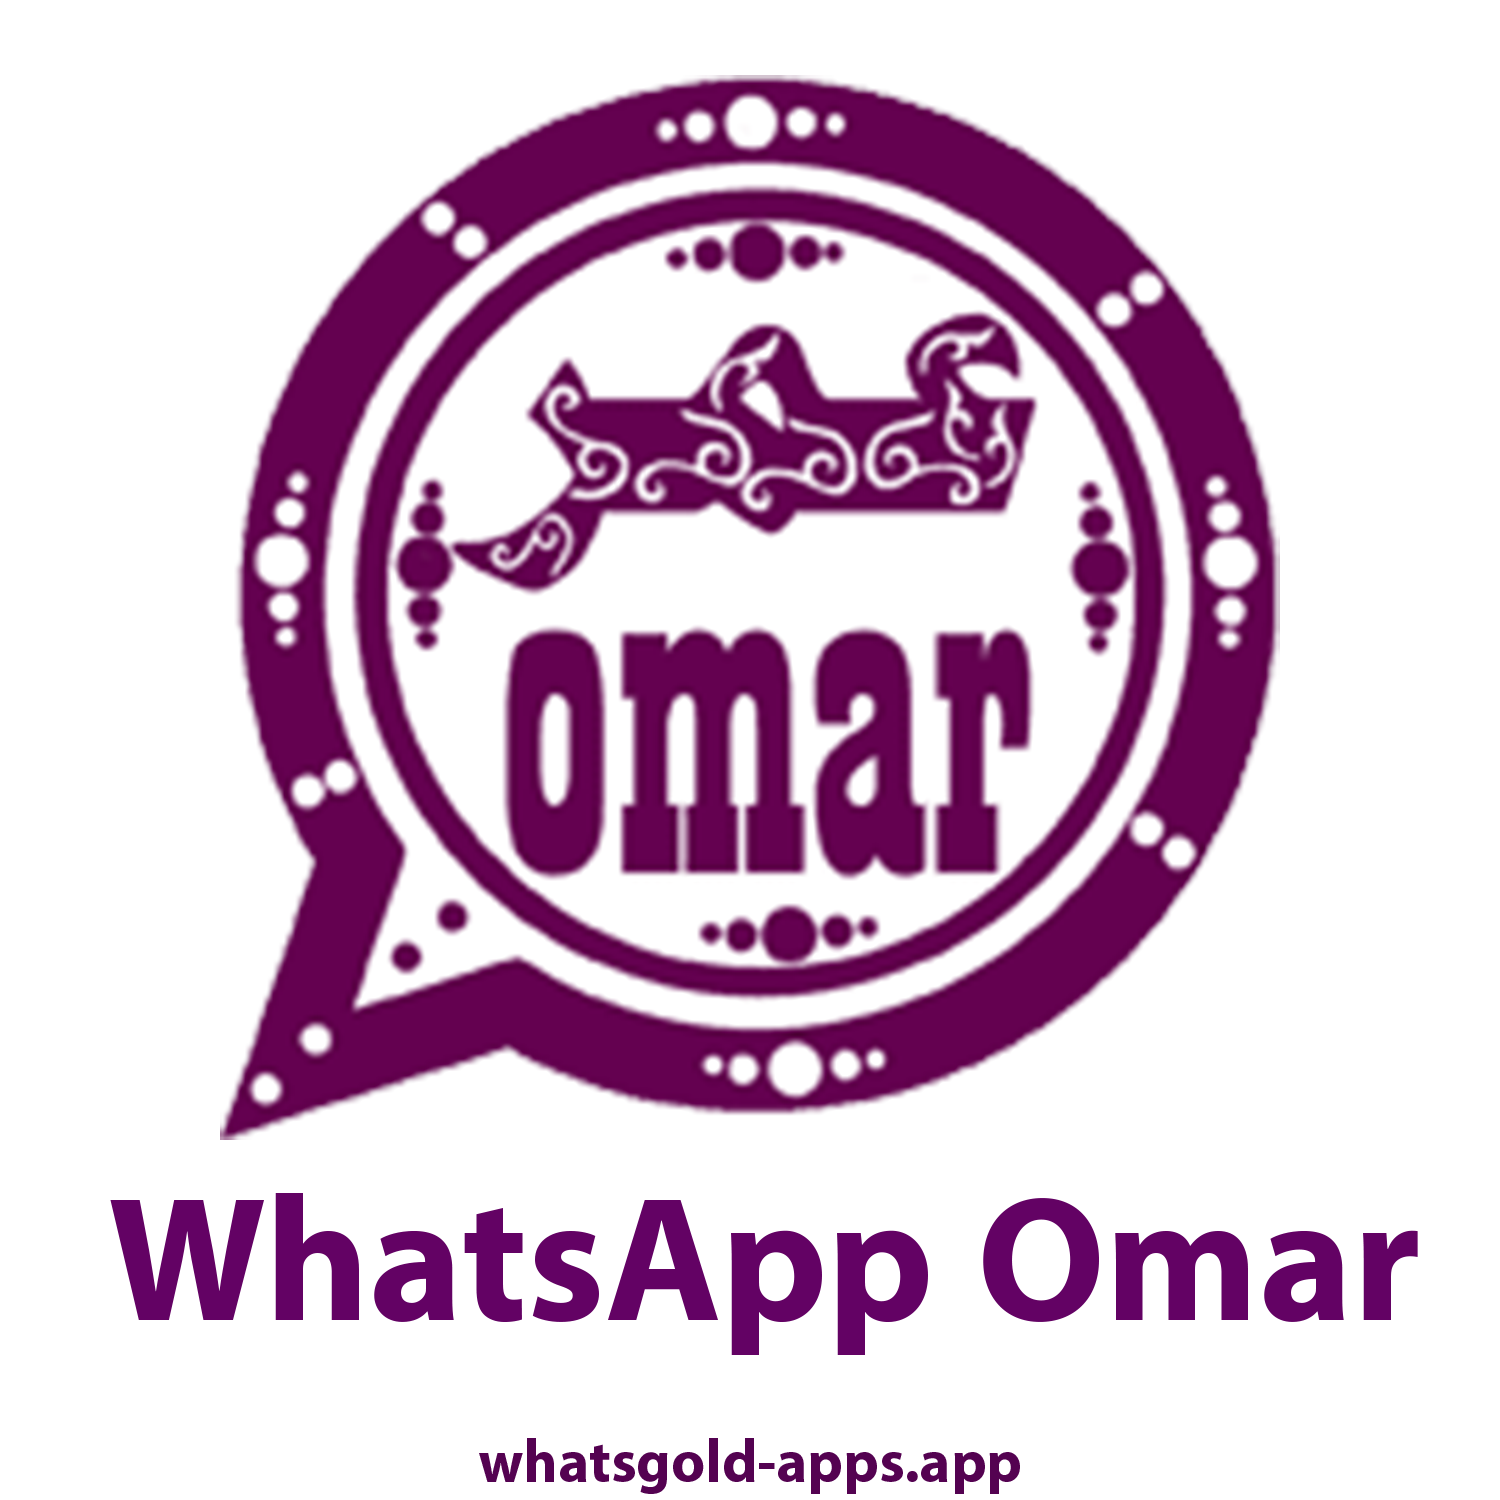 Download WhatsApp Omar